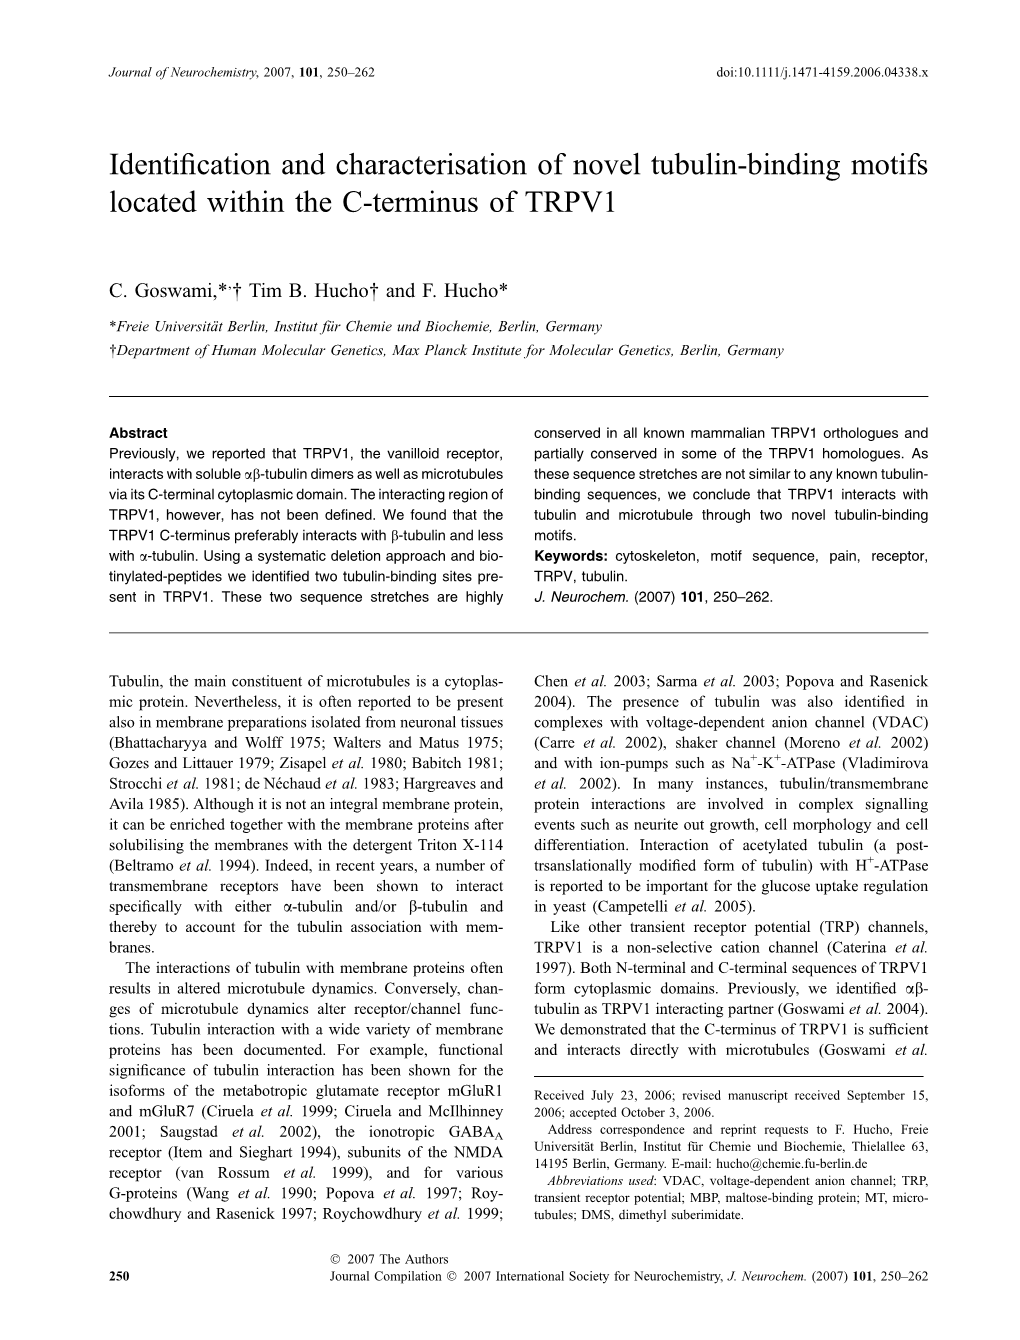 Identification and Characterisation of Novel Tubulin-Binding Motifs